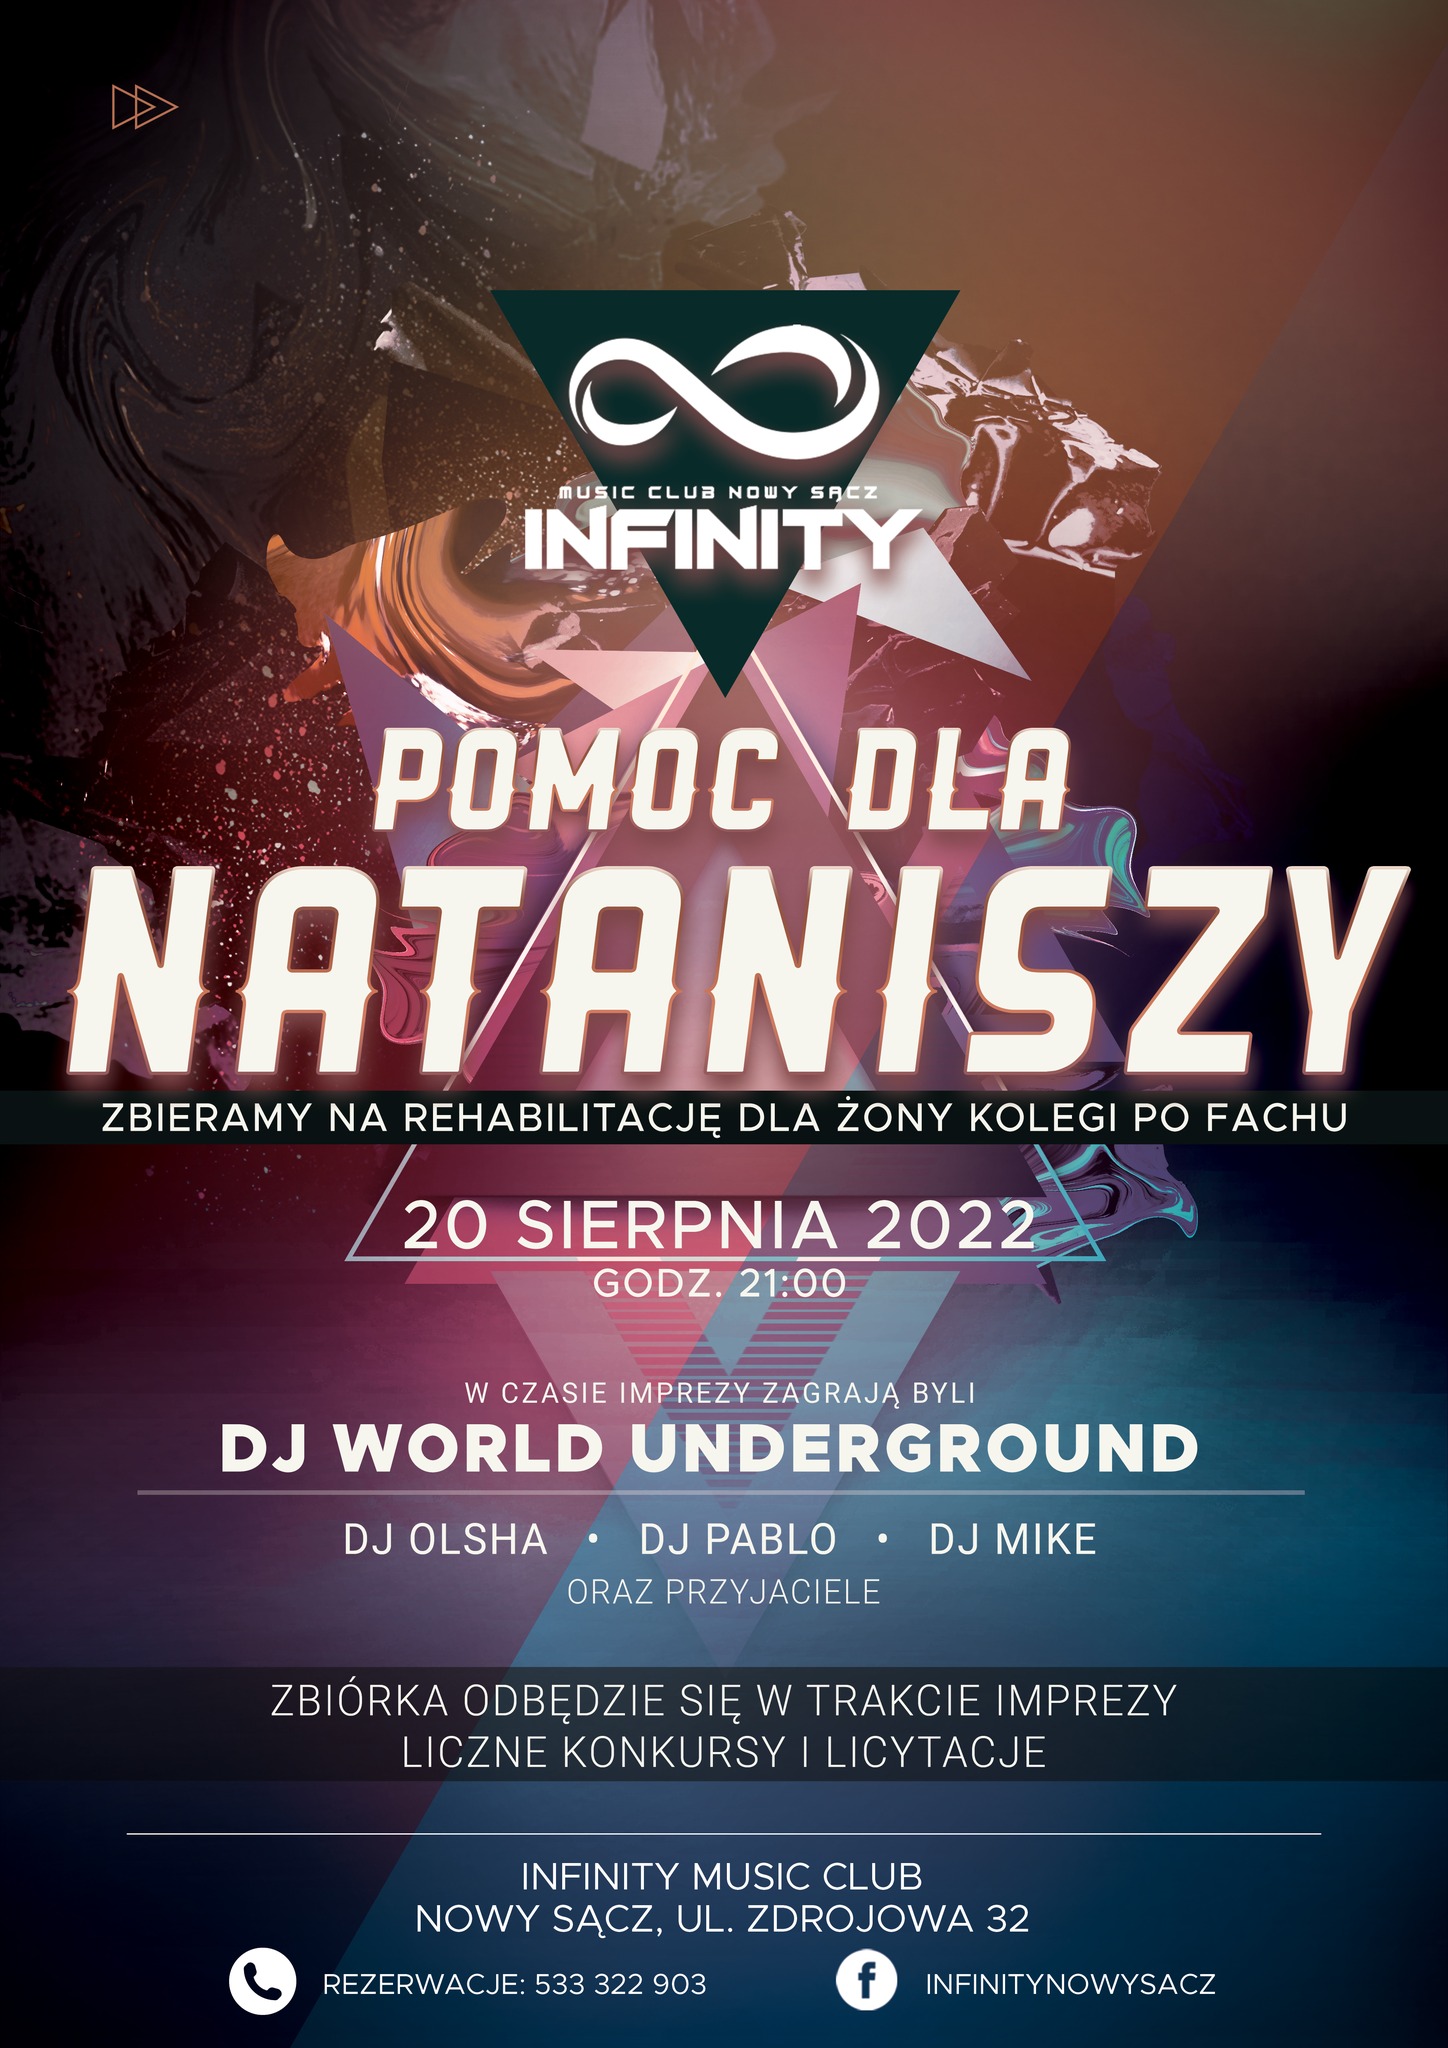 Infinity Music Club, Natanisza, zbiórka